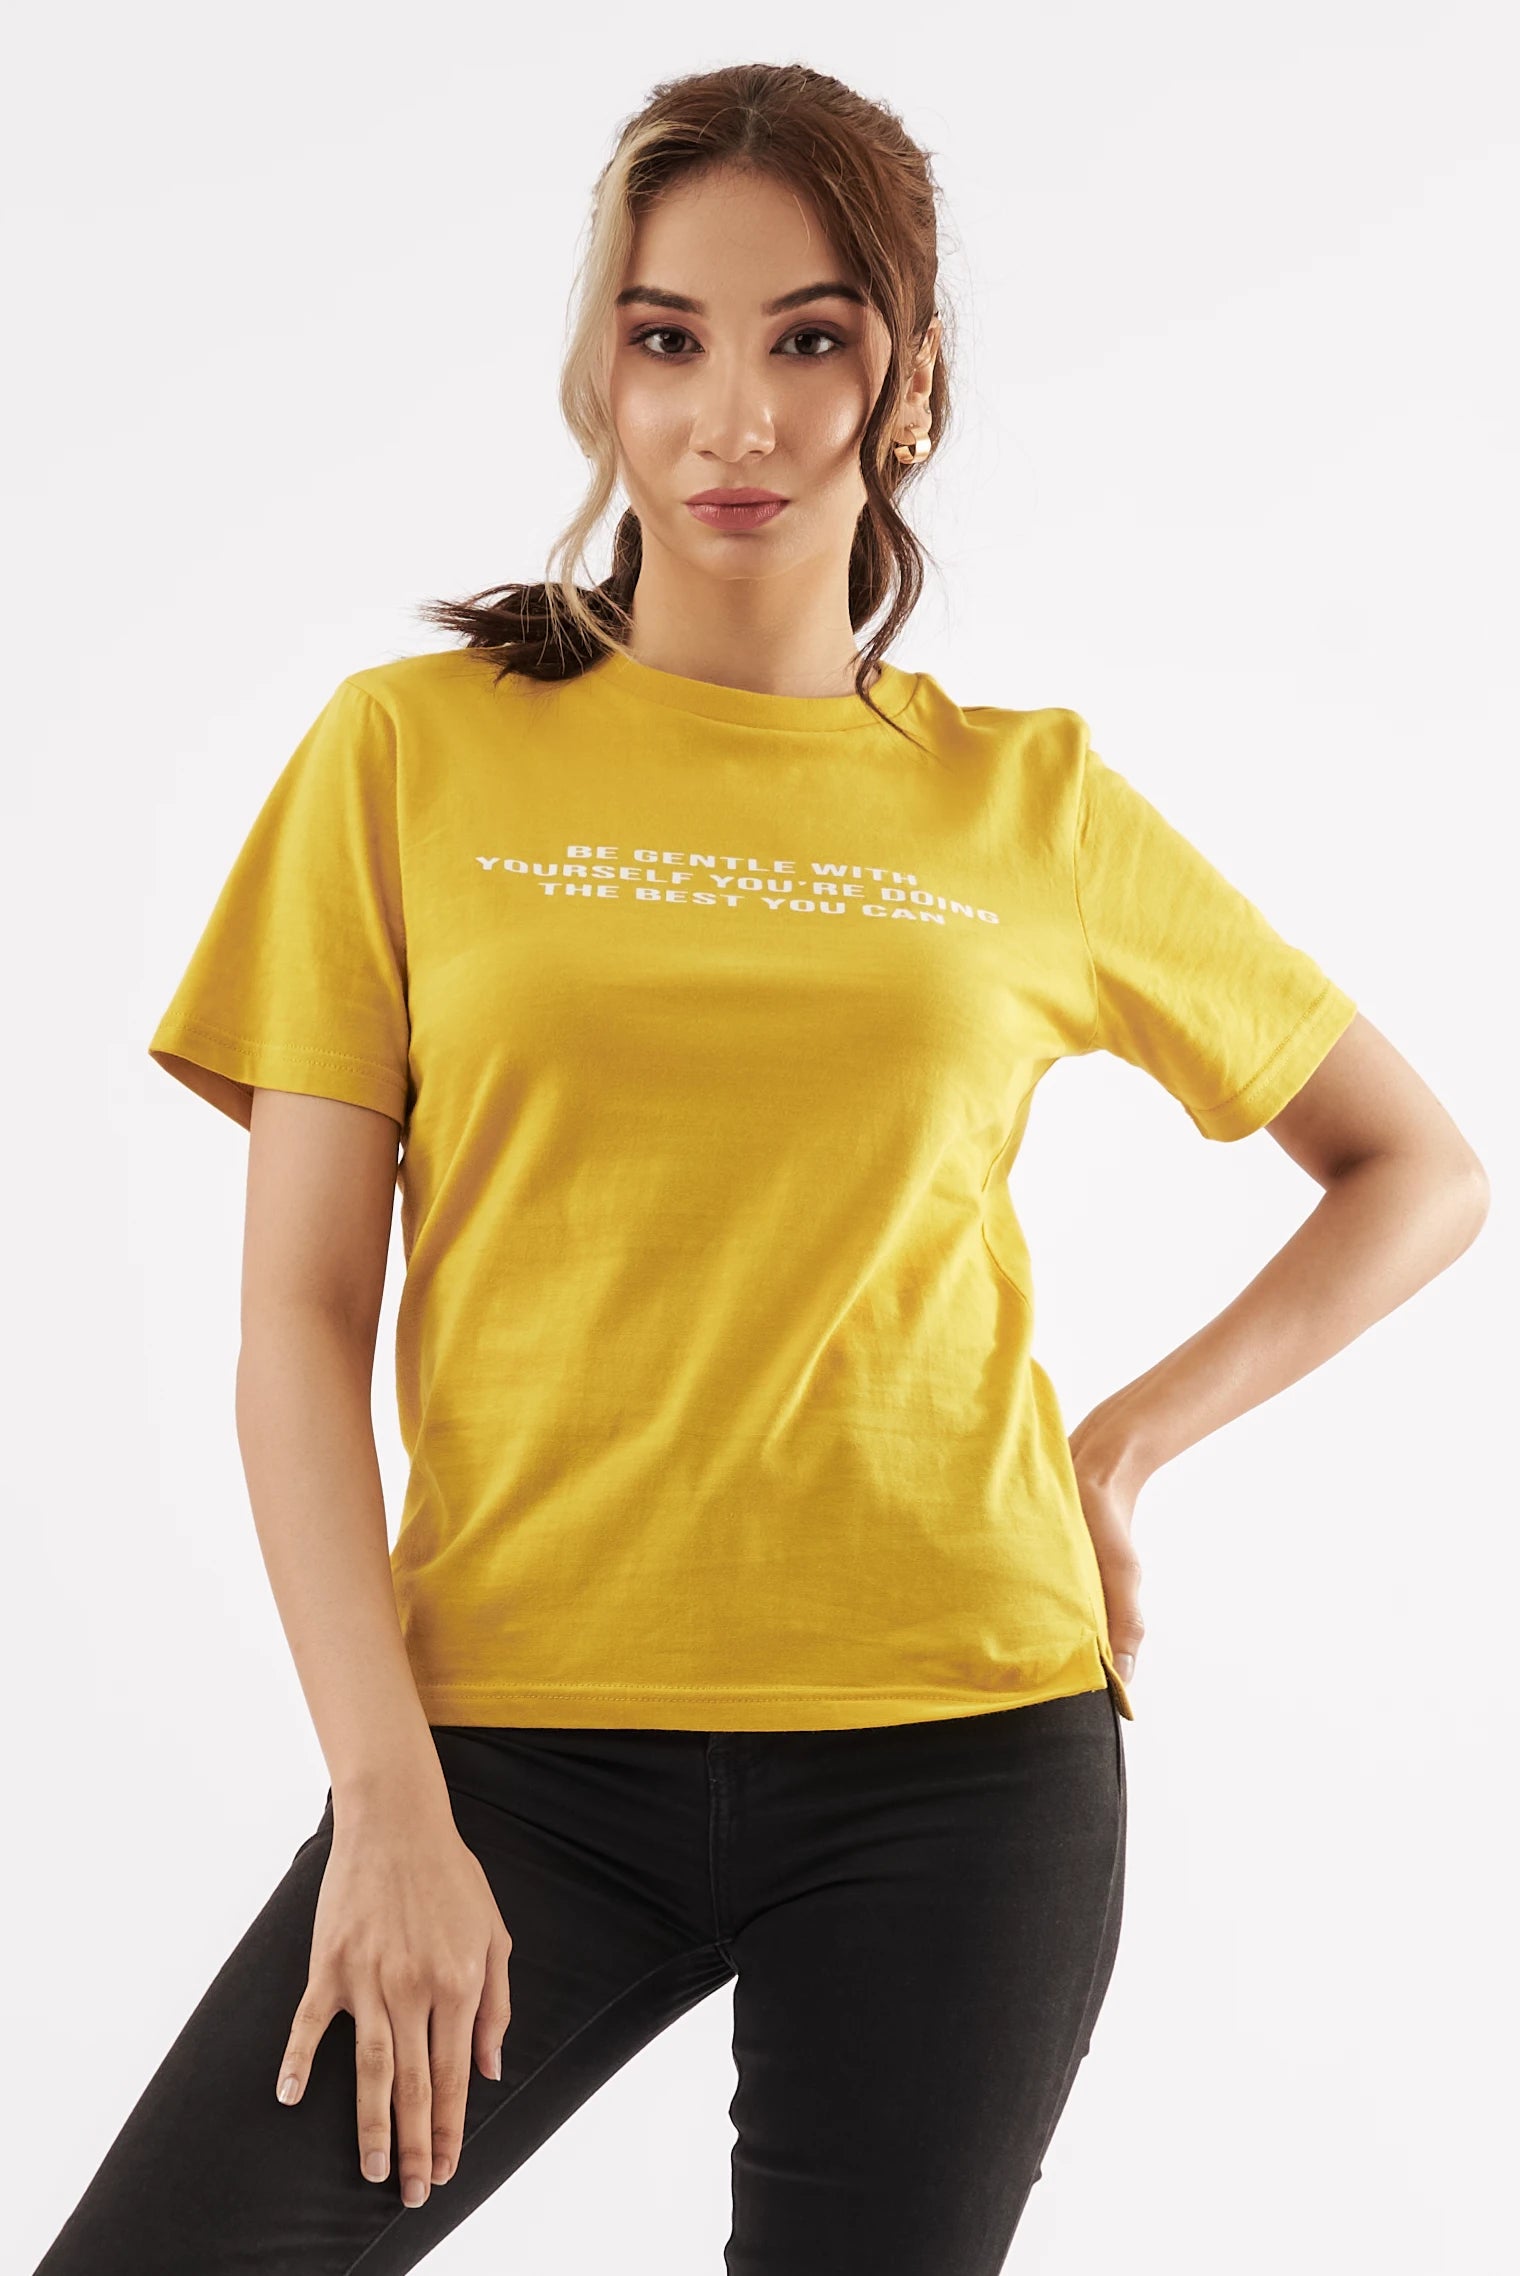 Women's Self-Compassion Graphic T-Shirt Mustard